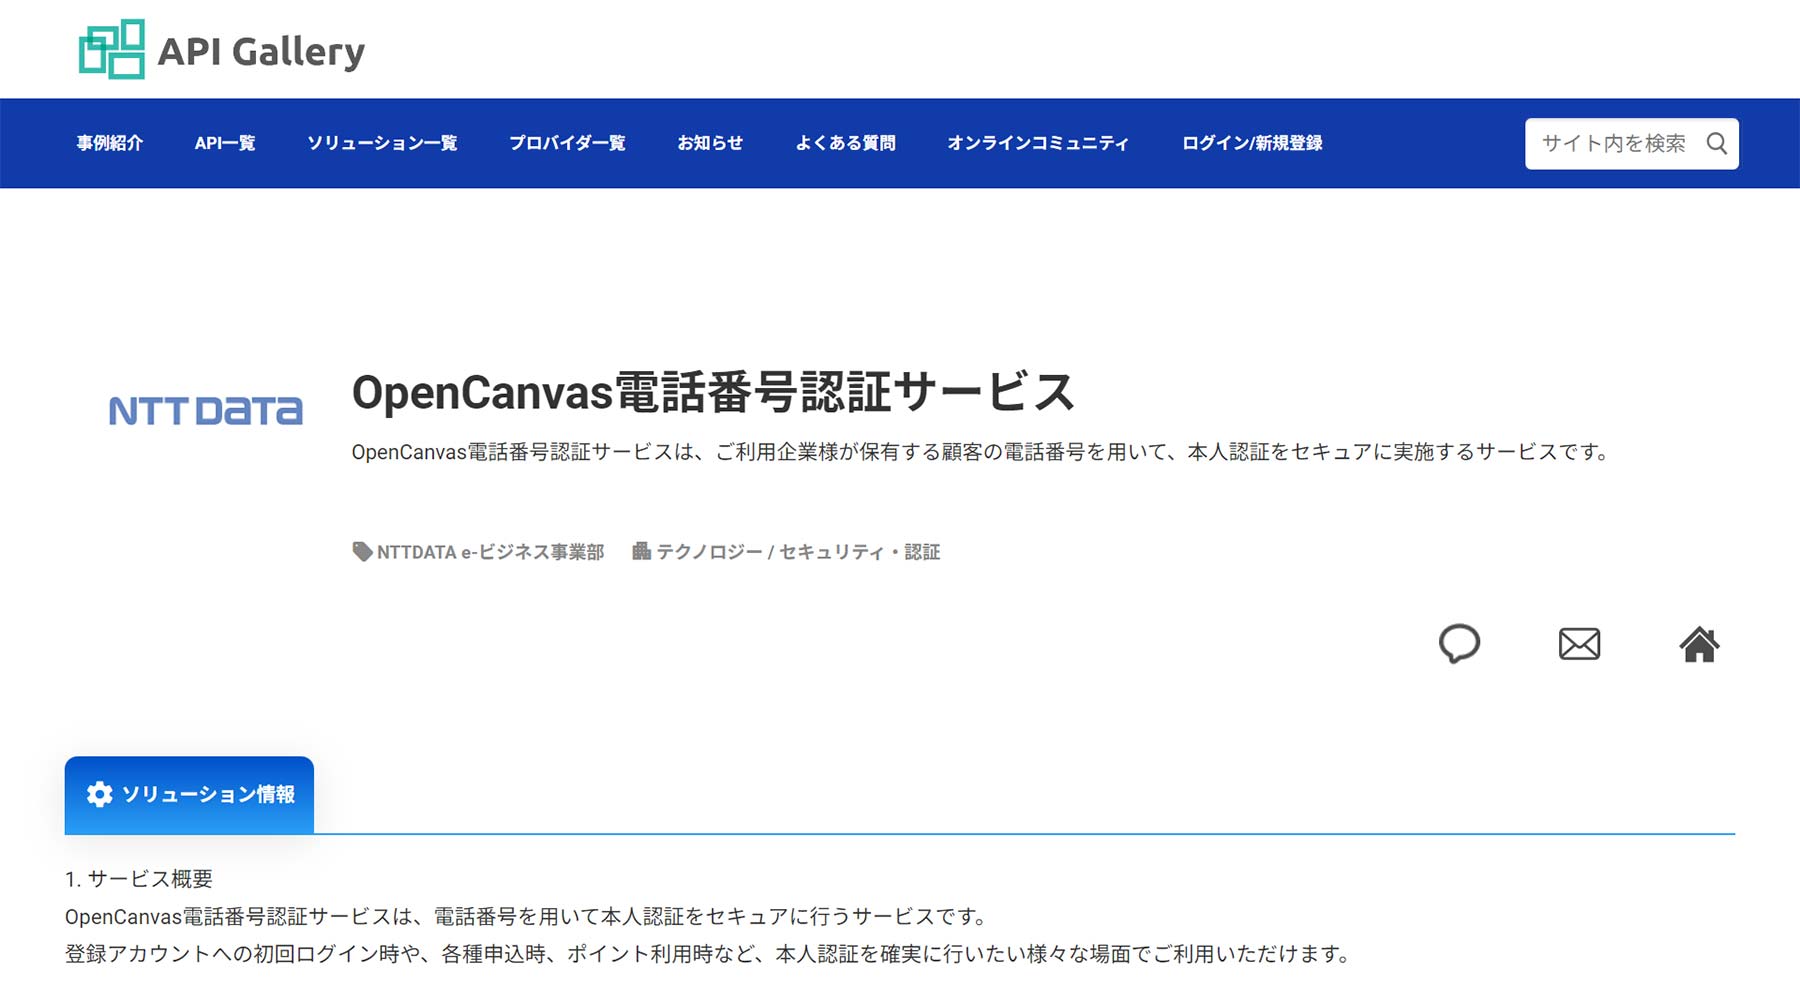 OpenCanvas電話番号認証サービス公式Webサイト